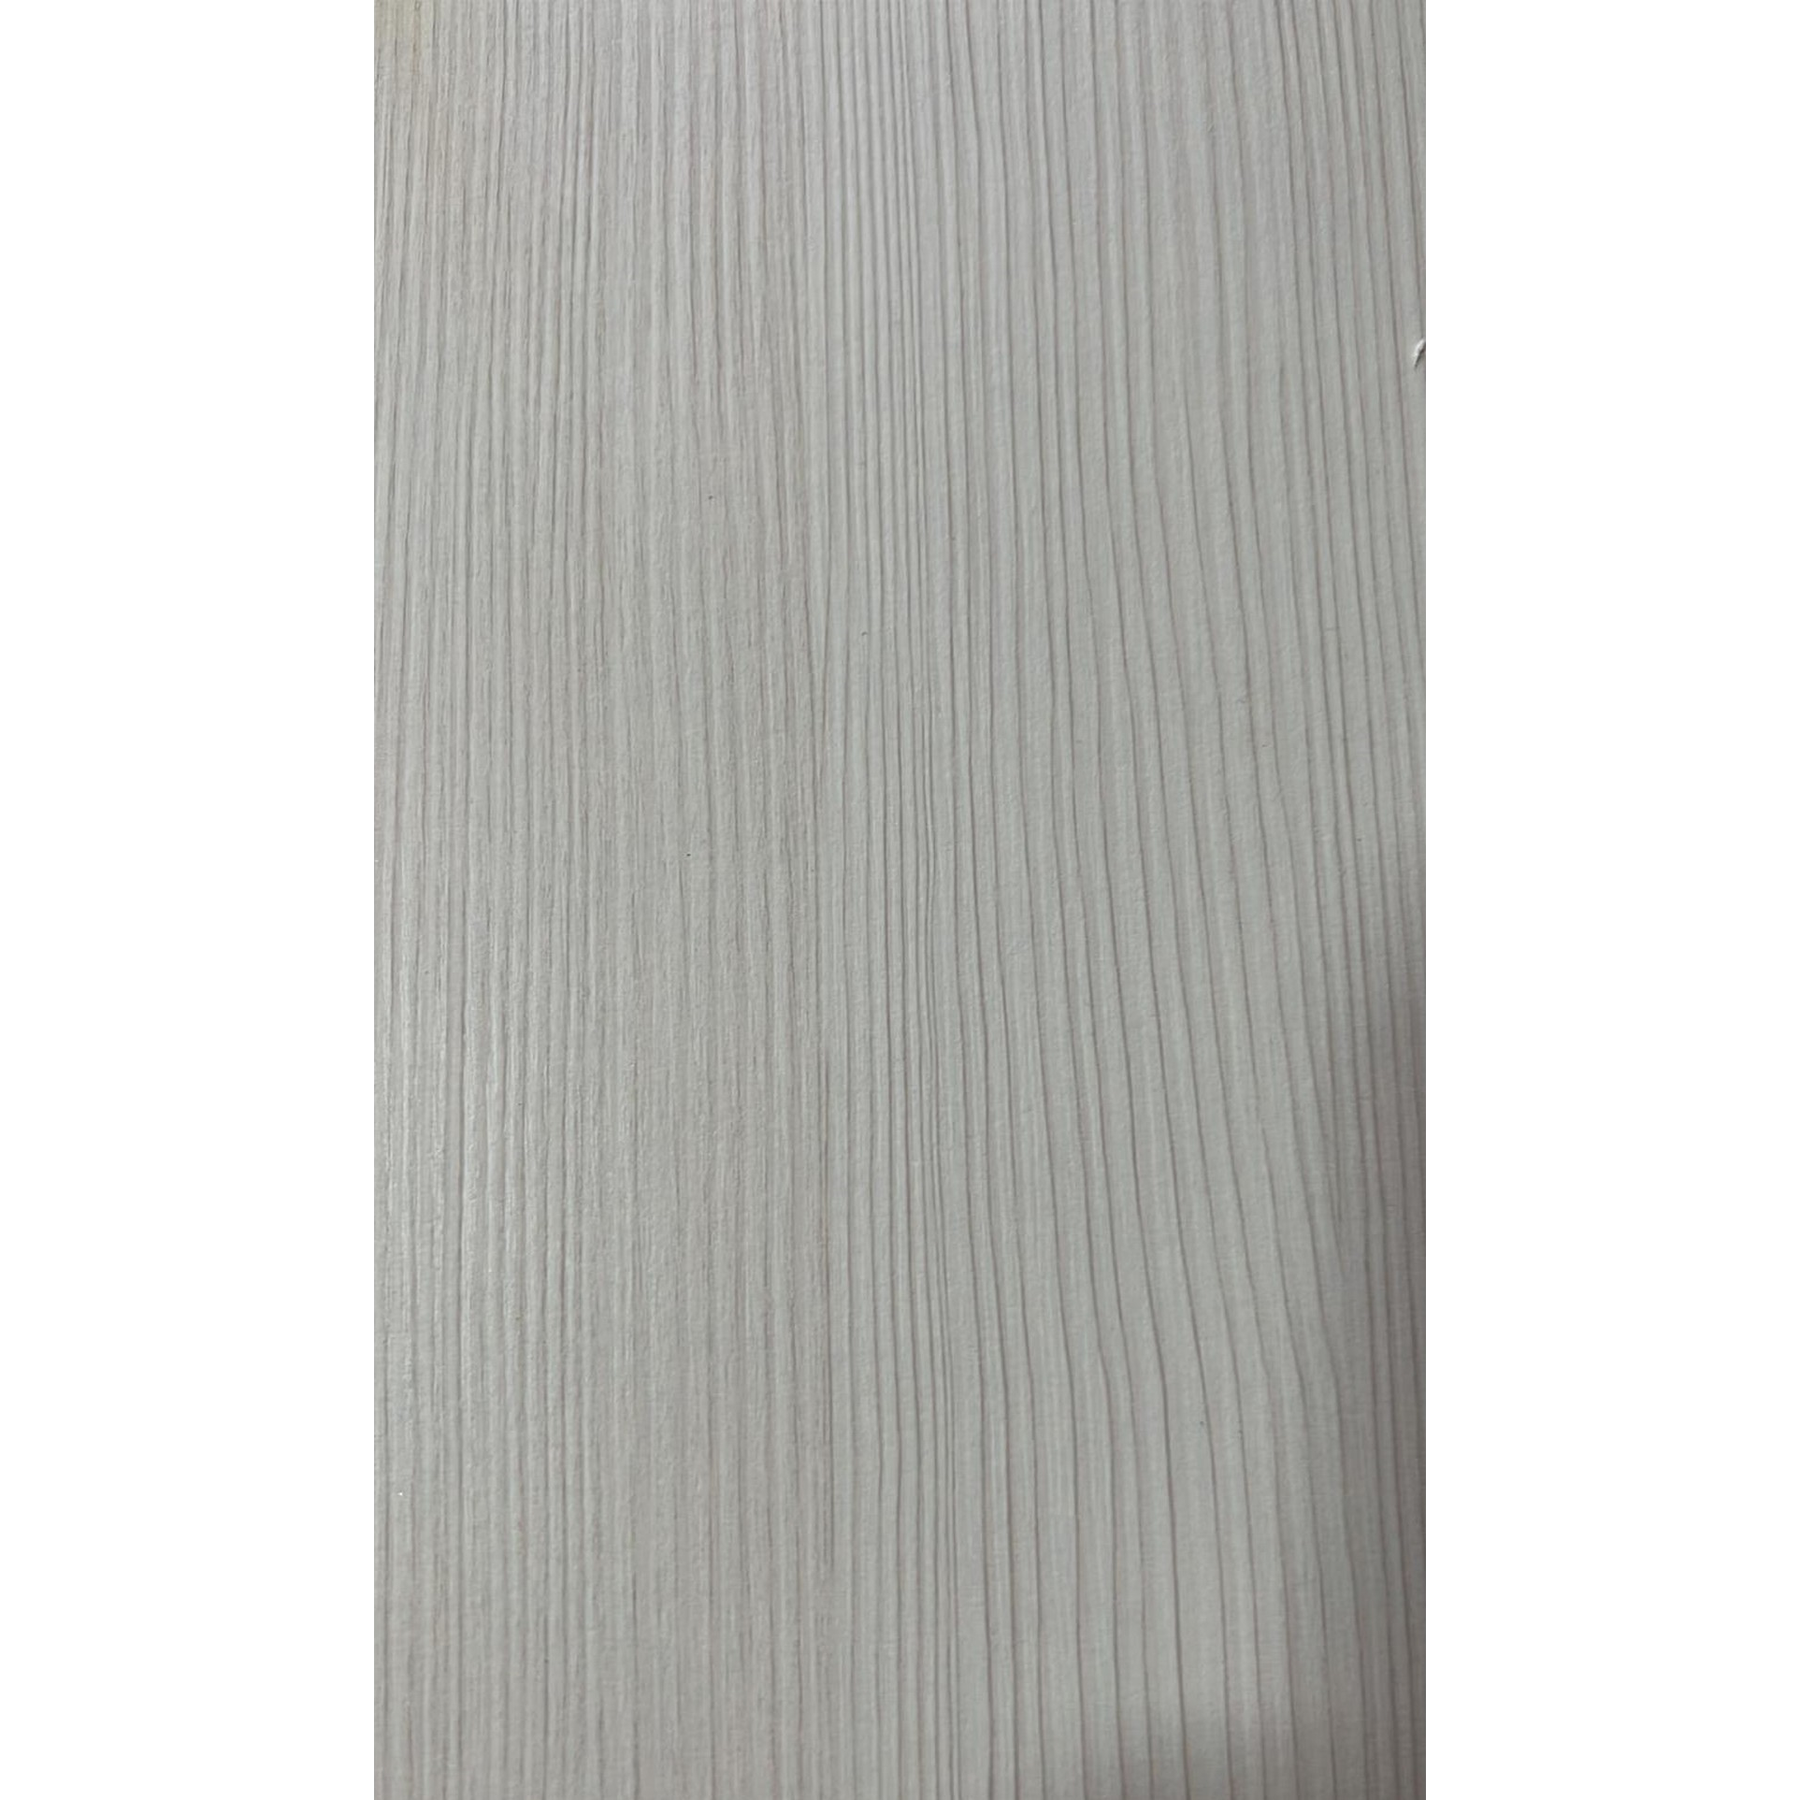 Masuta Tiffany (Tiffy), woodline crem, 110x60x50 cm